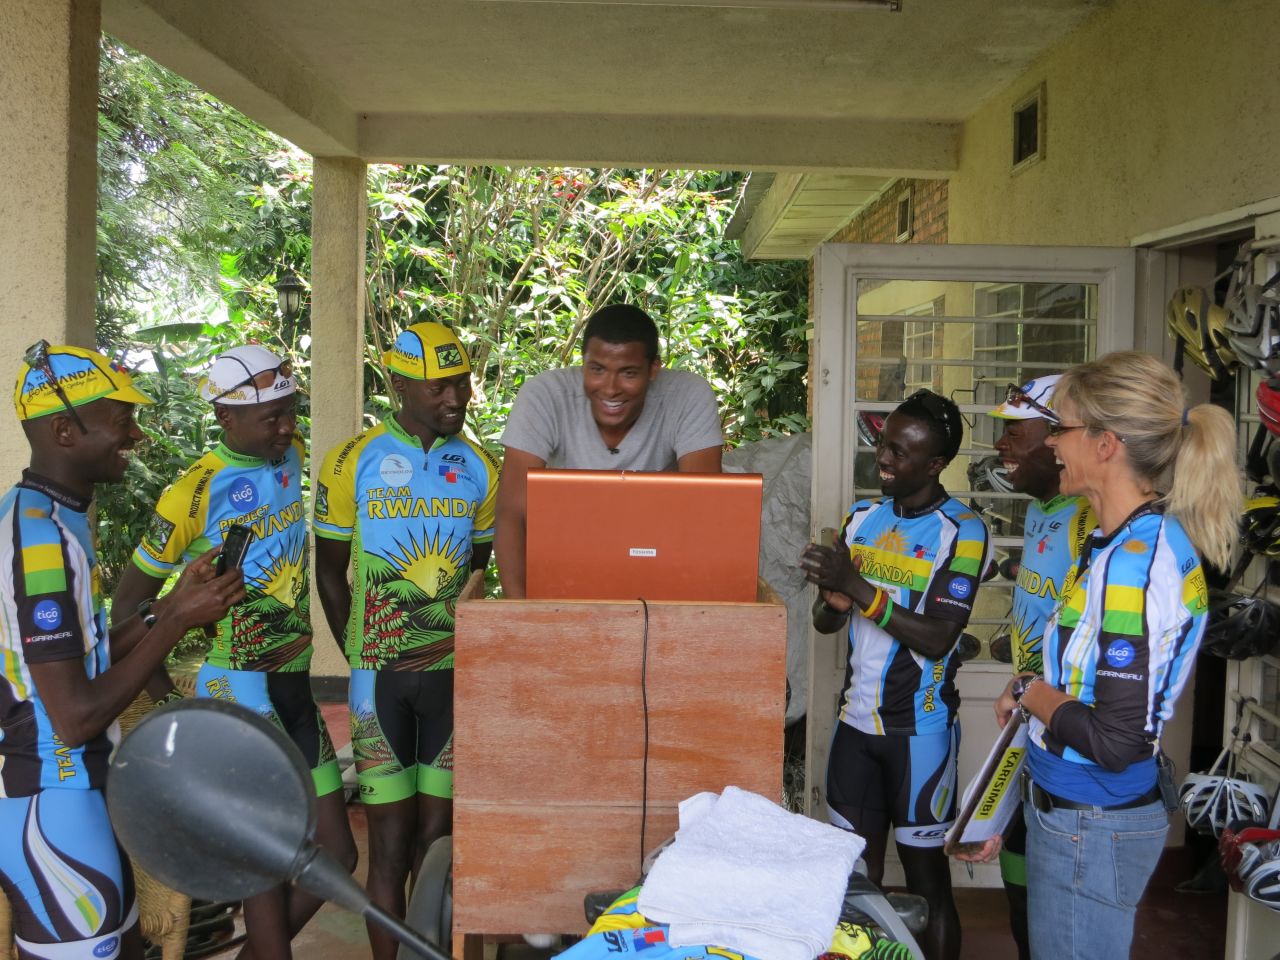 Inside Africa's Errol Barnett tests his cycling power on Team Rwanda's velotron.